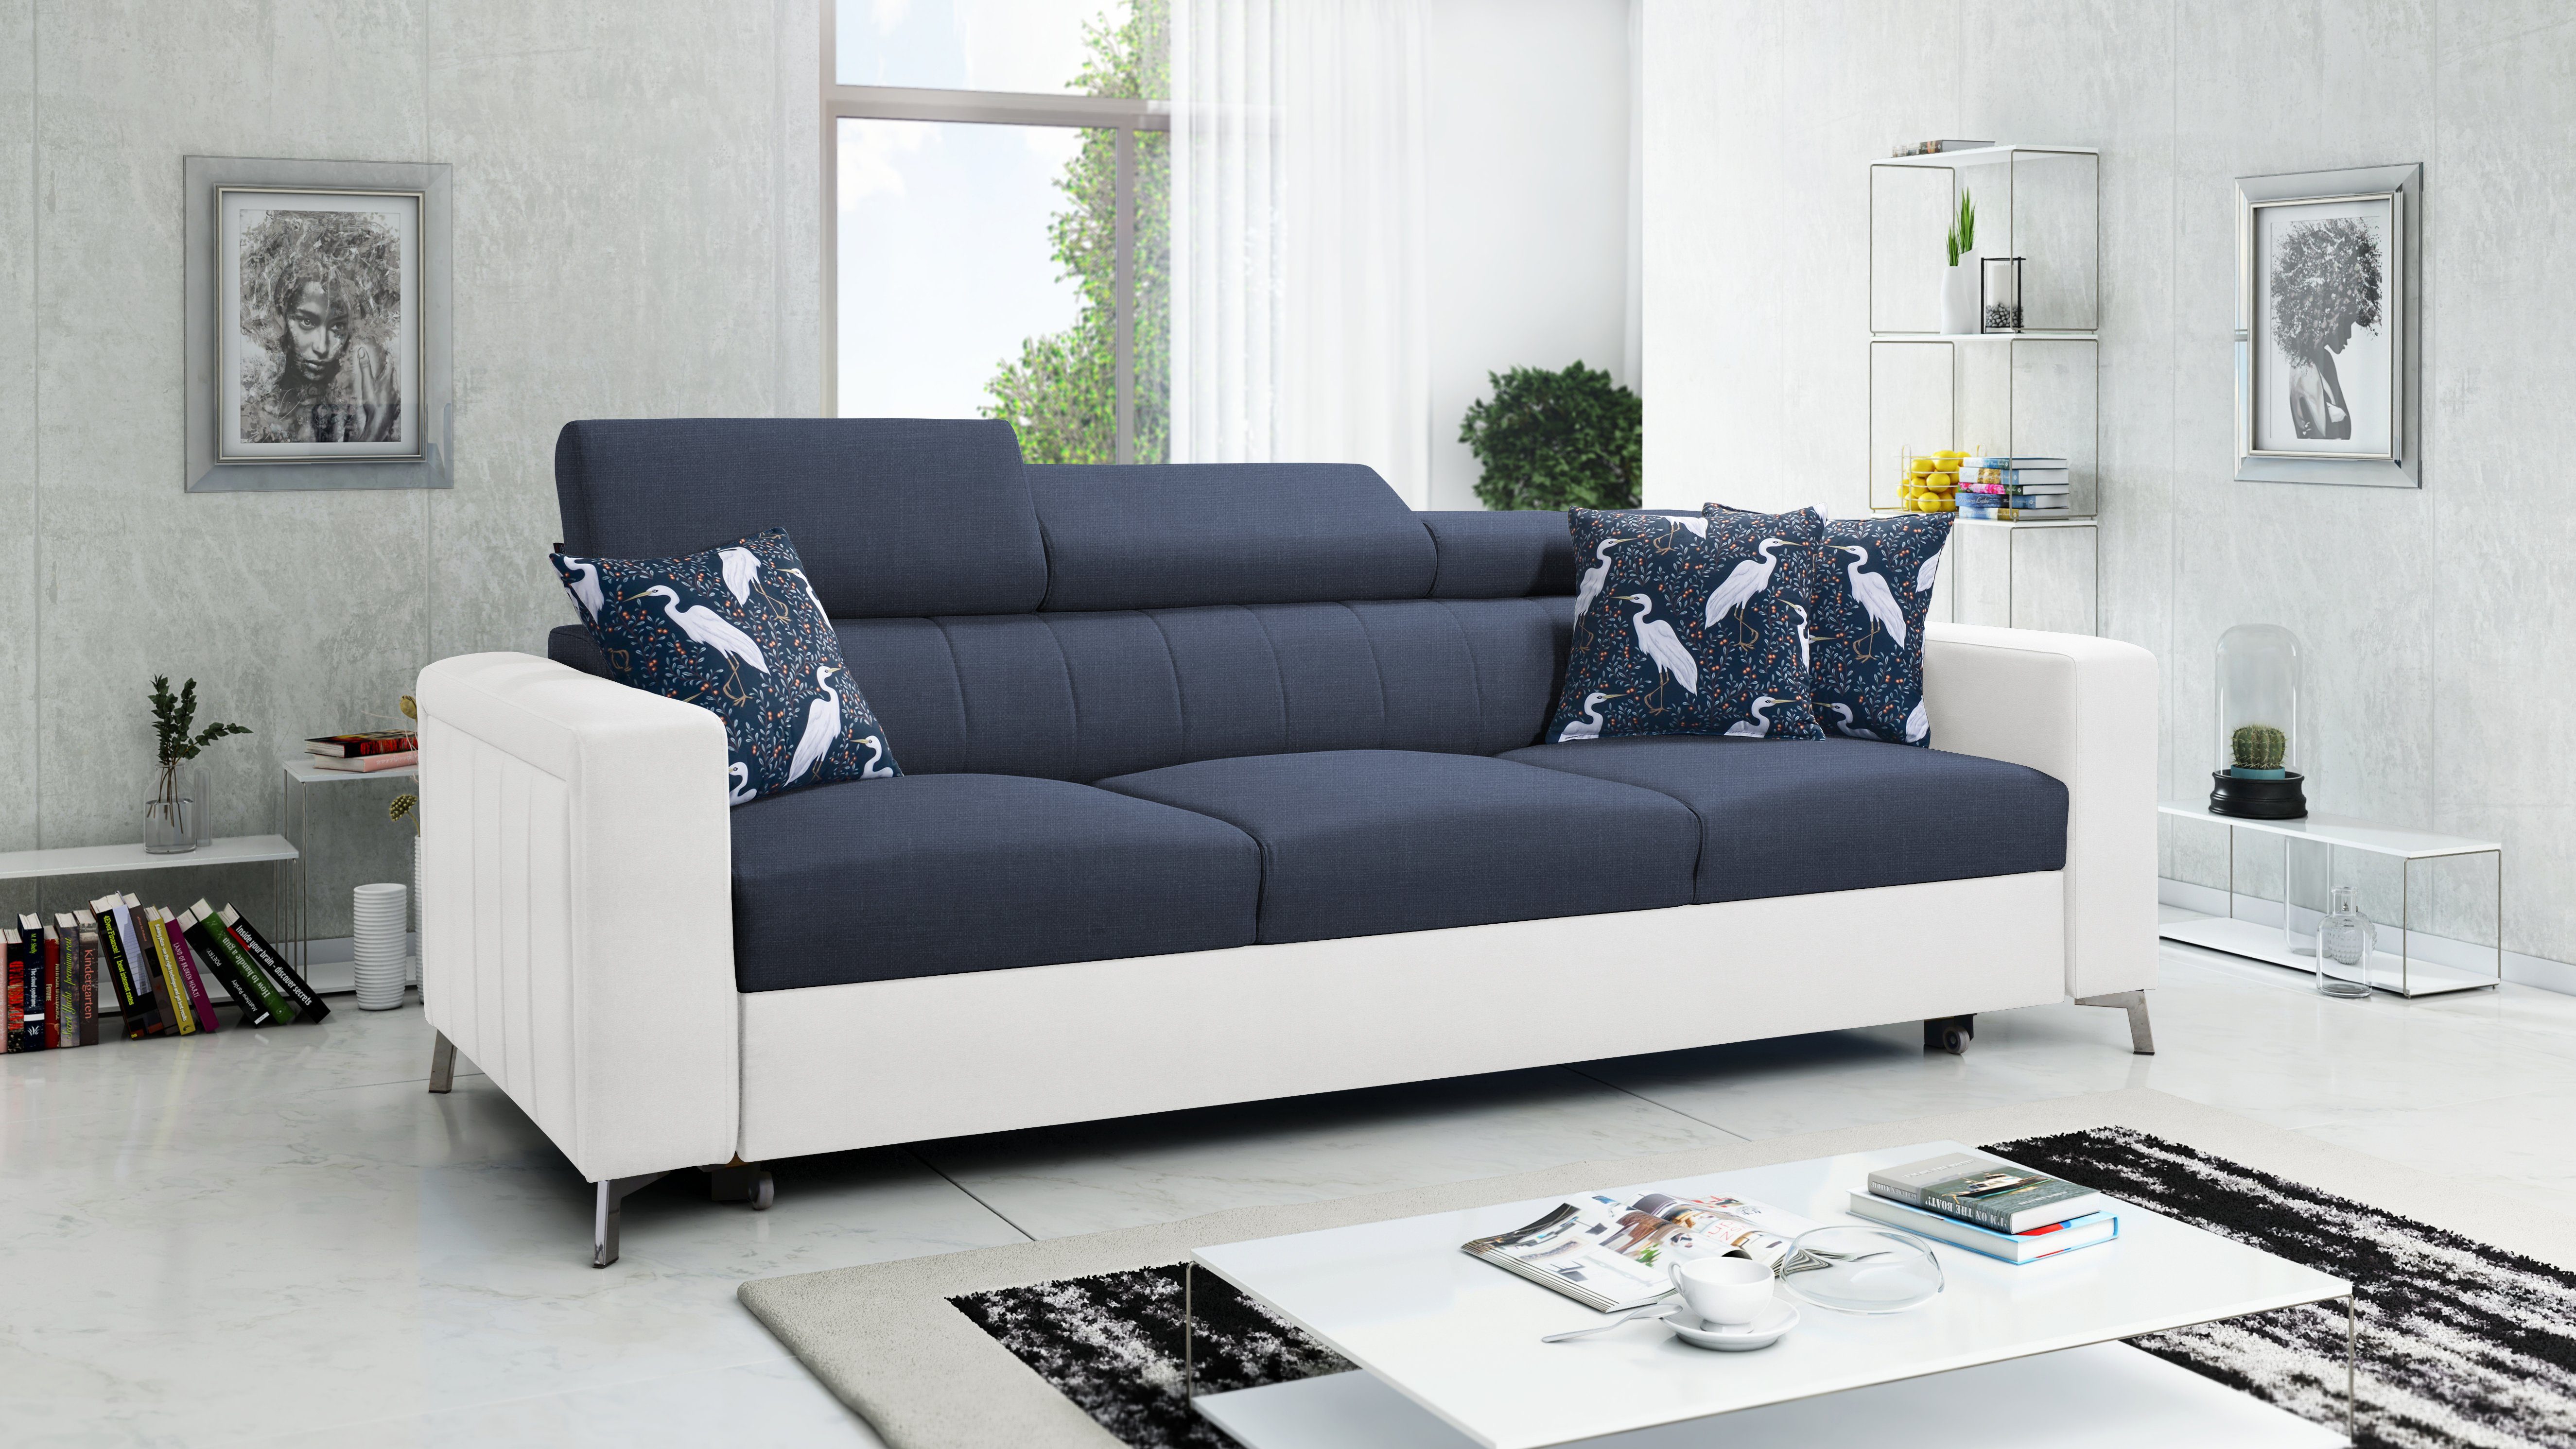 Best for Home Sofa BERTA SAWANA80EKJI